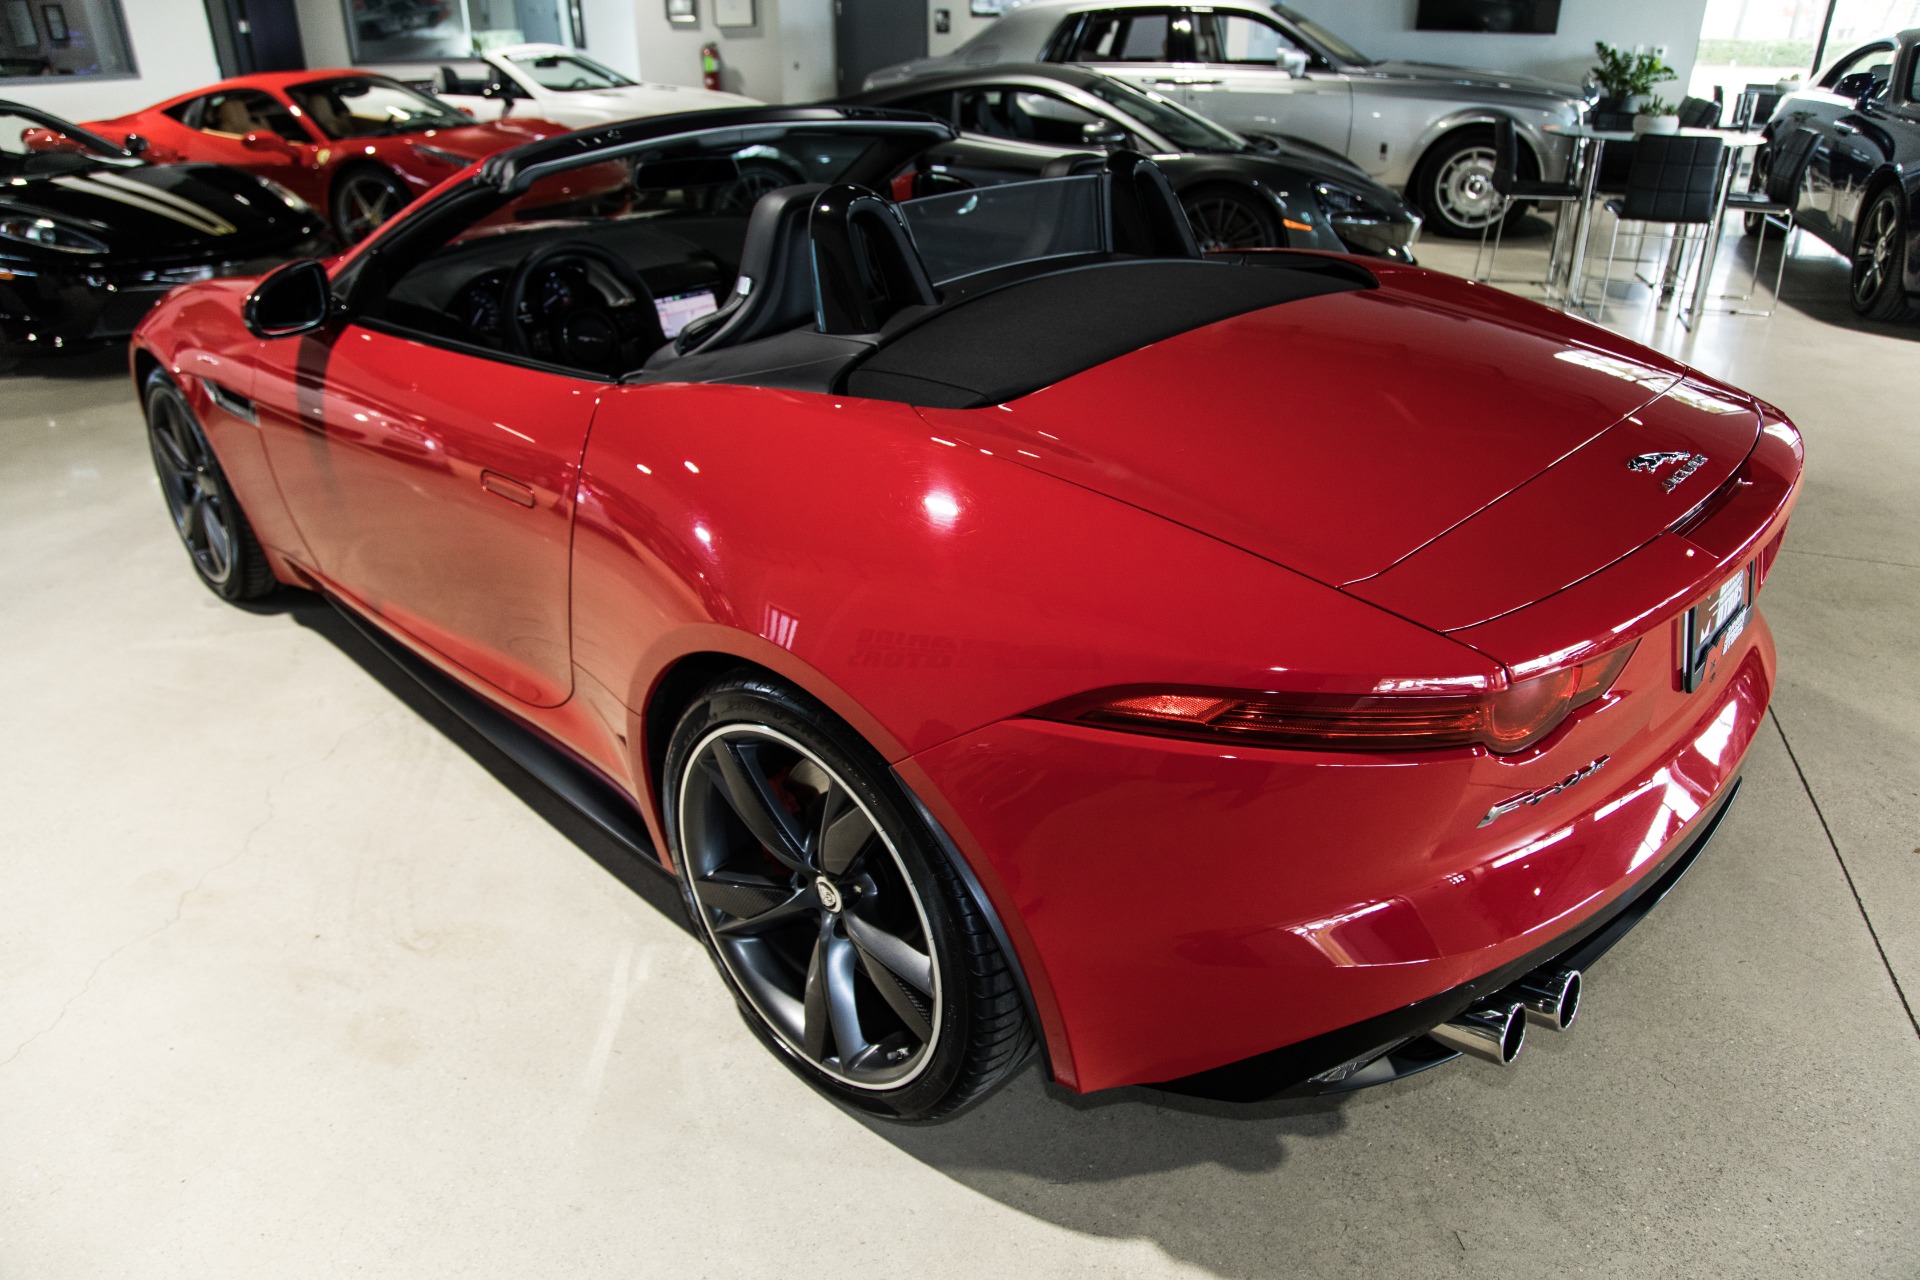 Used 2014 Jaguar F-TYPE V8 S For Sale ($47,900) | Marino ...